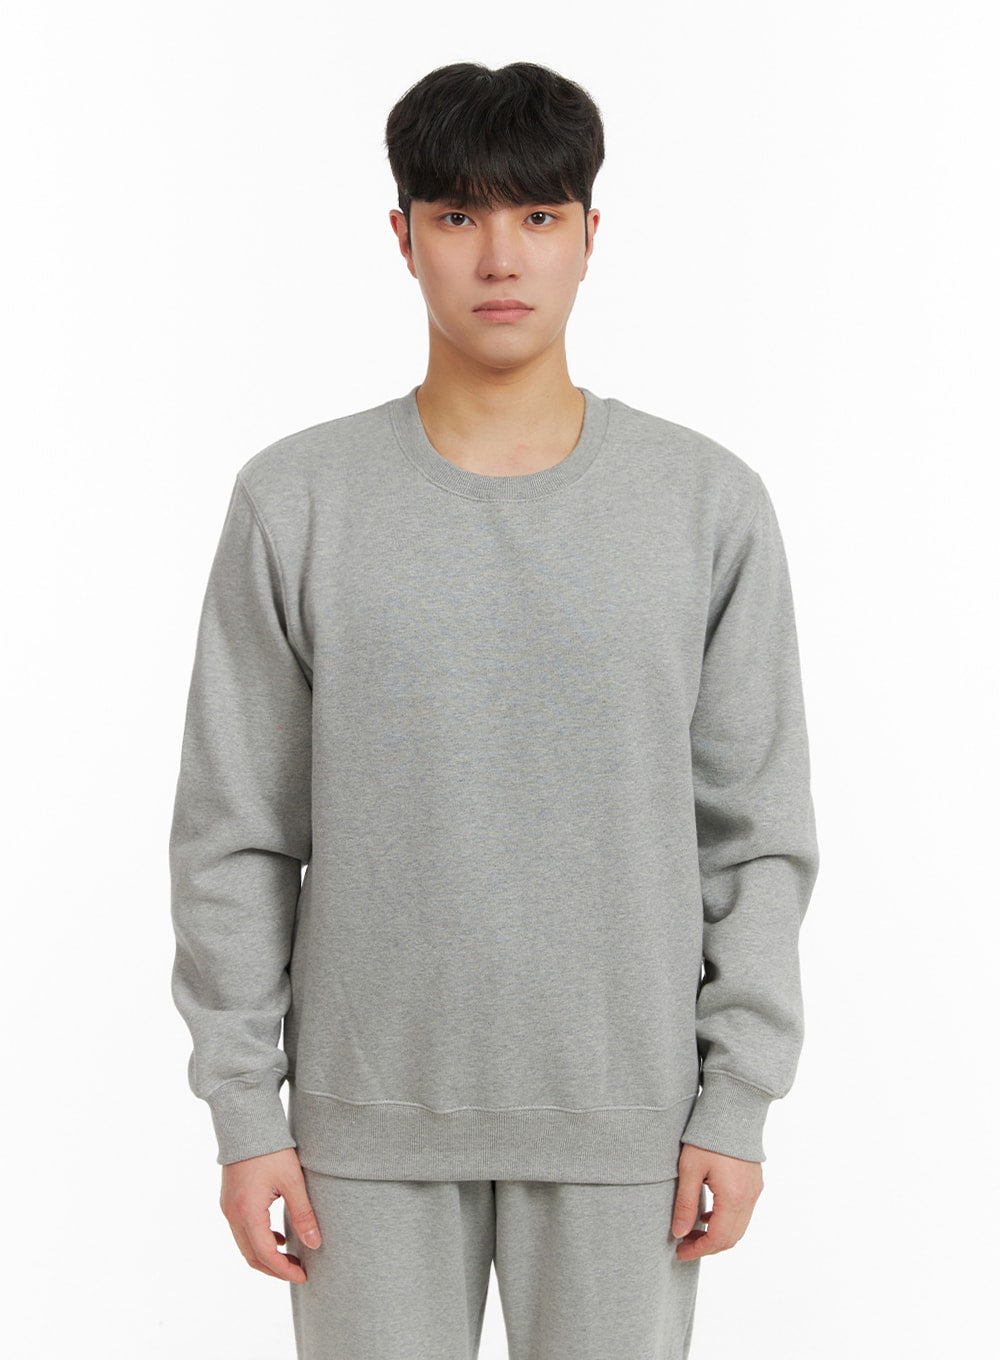 mens-basic-crewneck-sweatshirt-ia402-gray / Gray